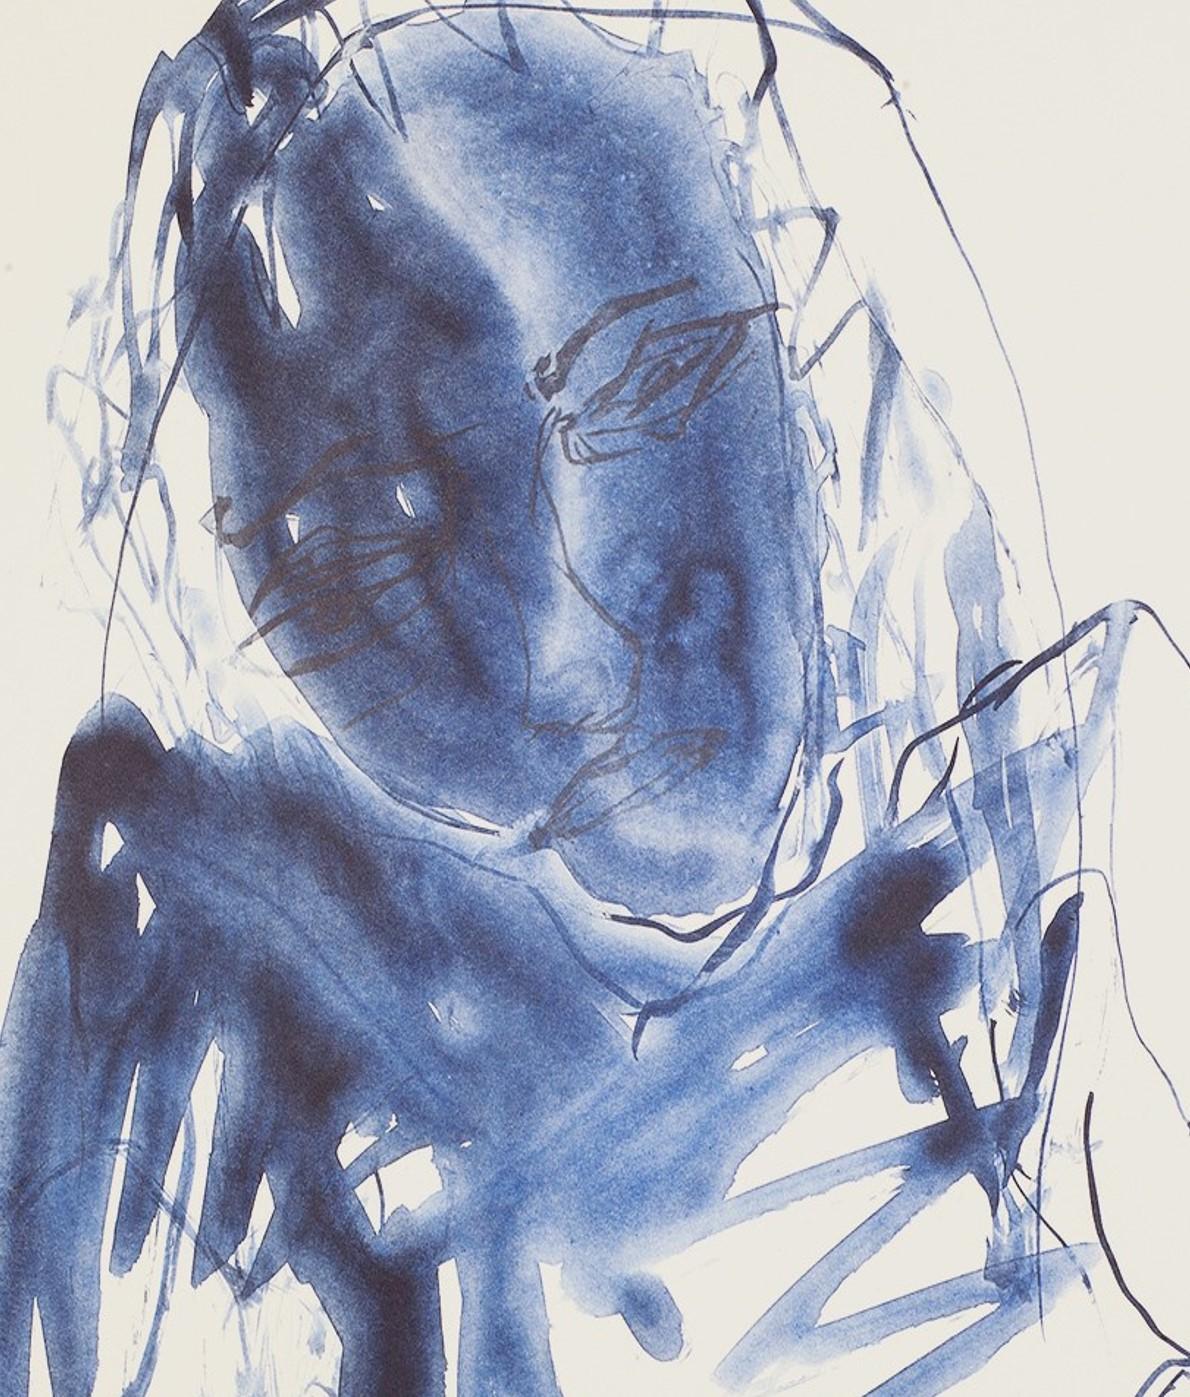 Blue Madonna - Emin, Contemporary, YBAs, Lithograph, Portrait, Black - Print by Tracey Emin